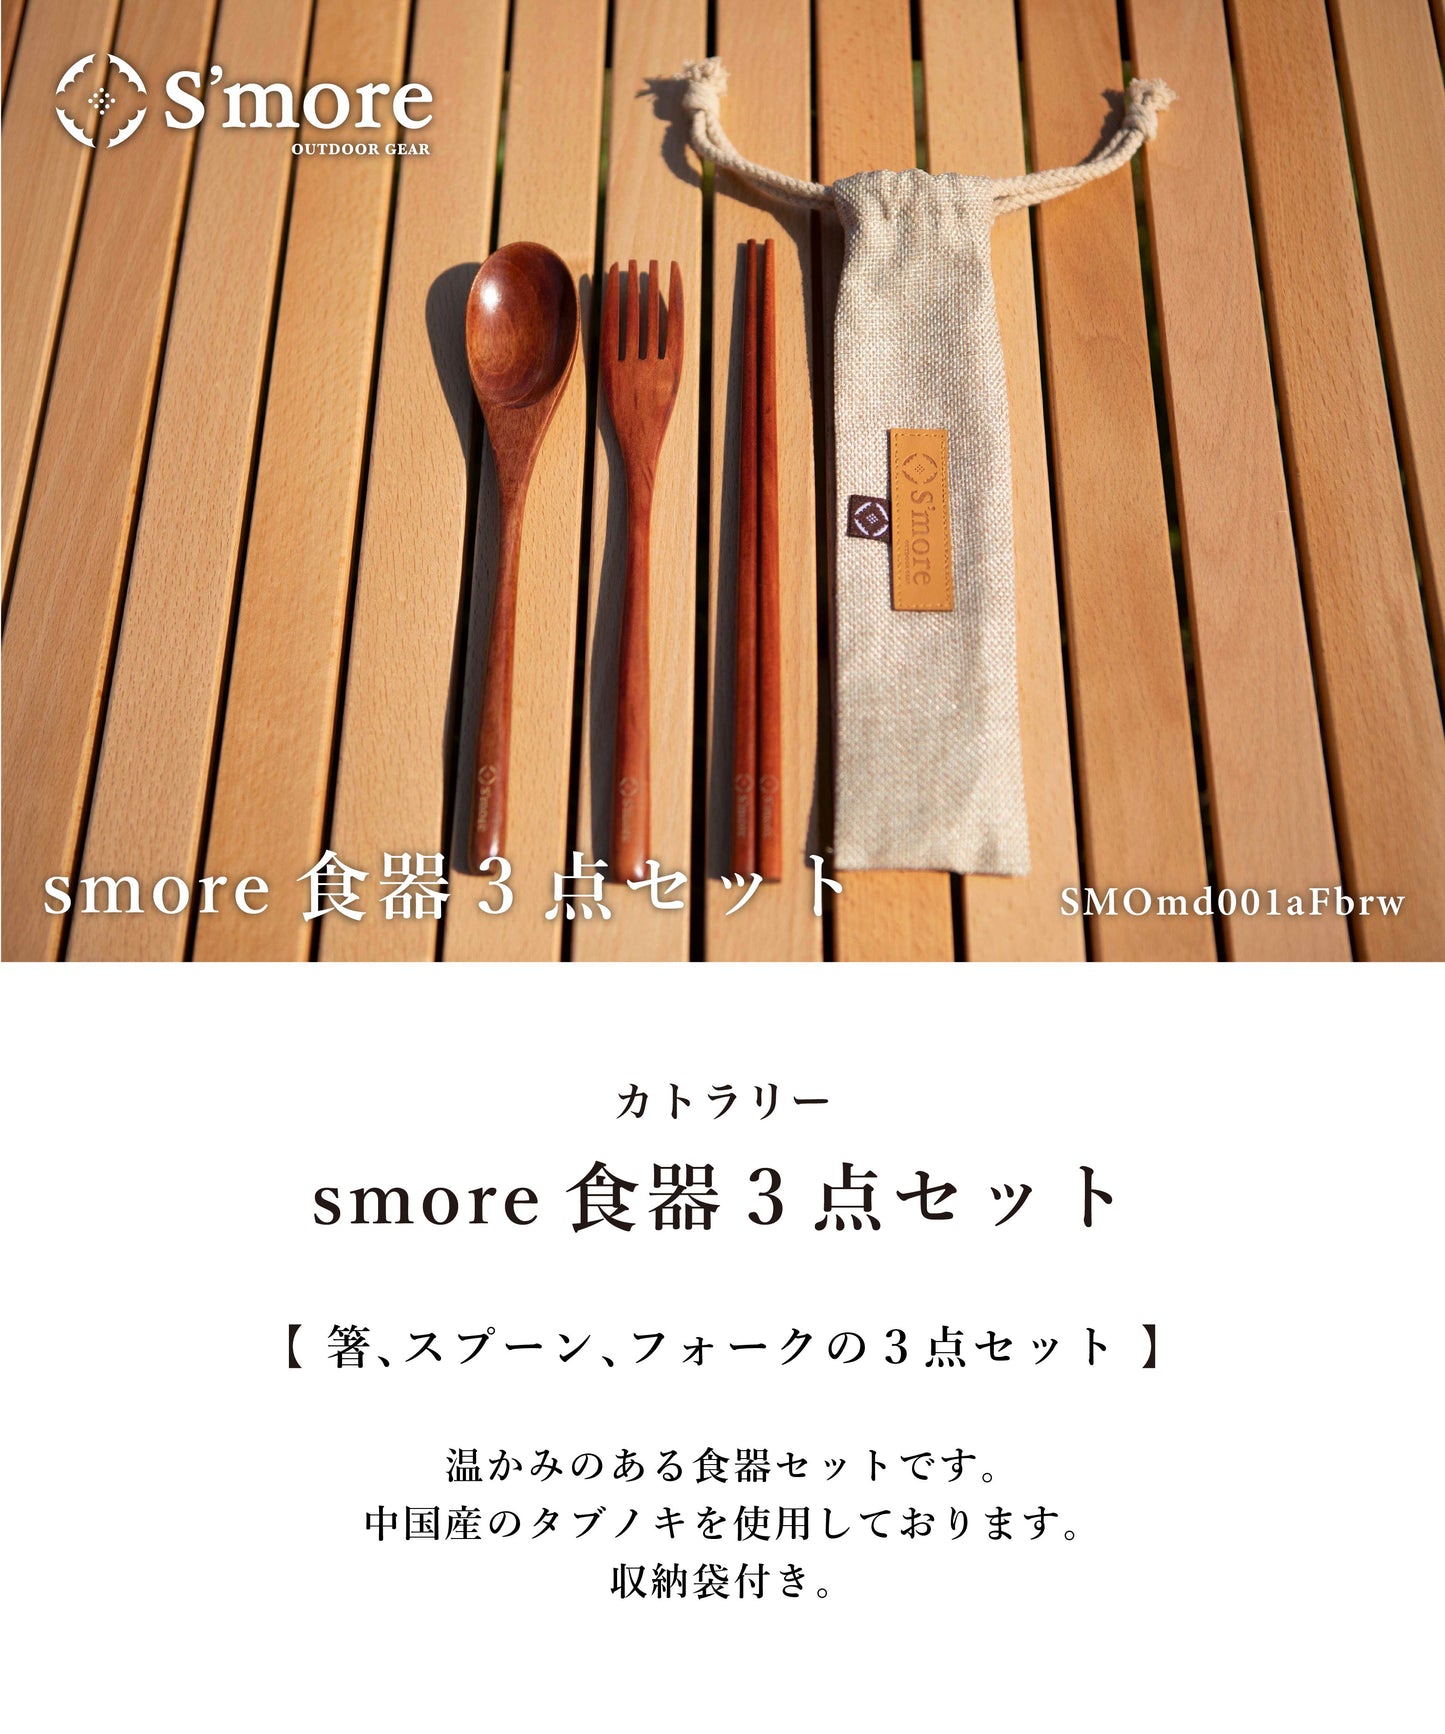 【S'more / Woodi Cutlery Set】 ウッディカトラリーセット キャンプ カトラリー 3点セット